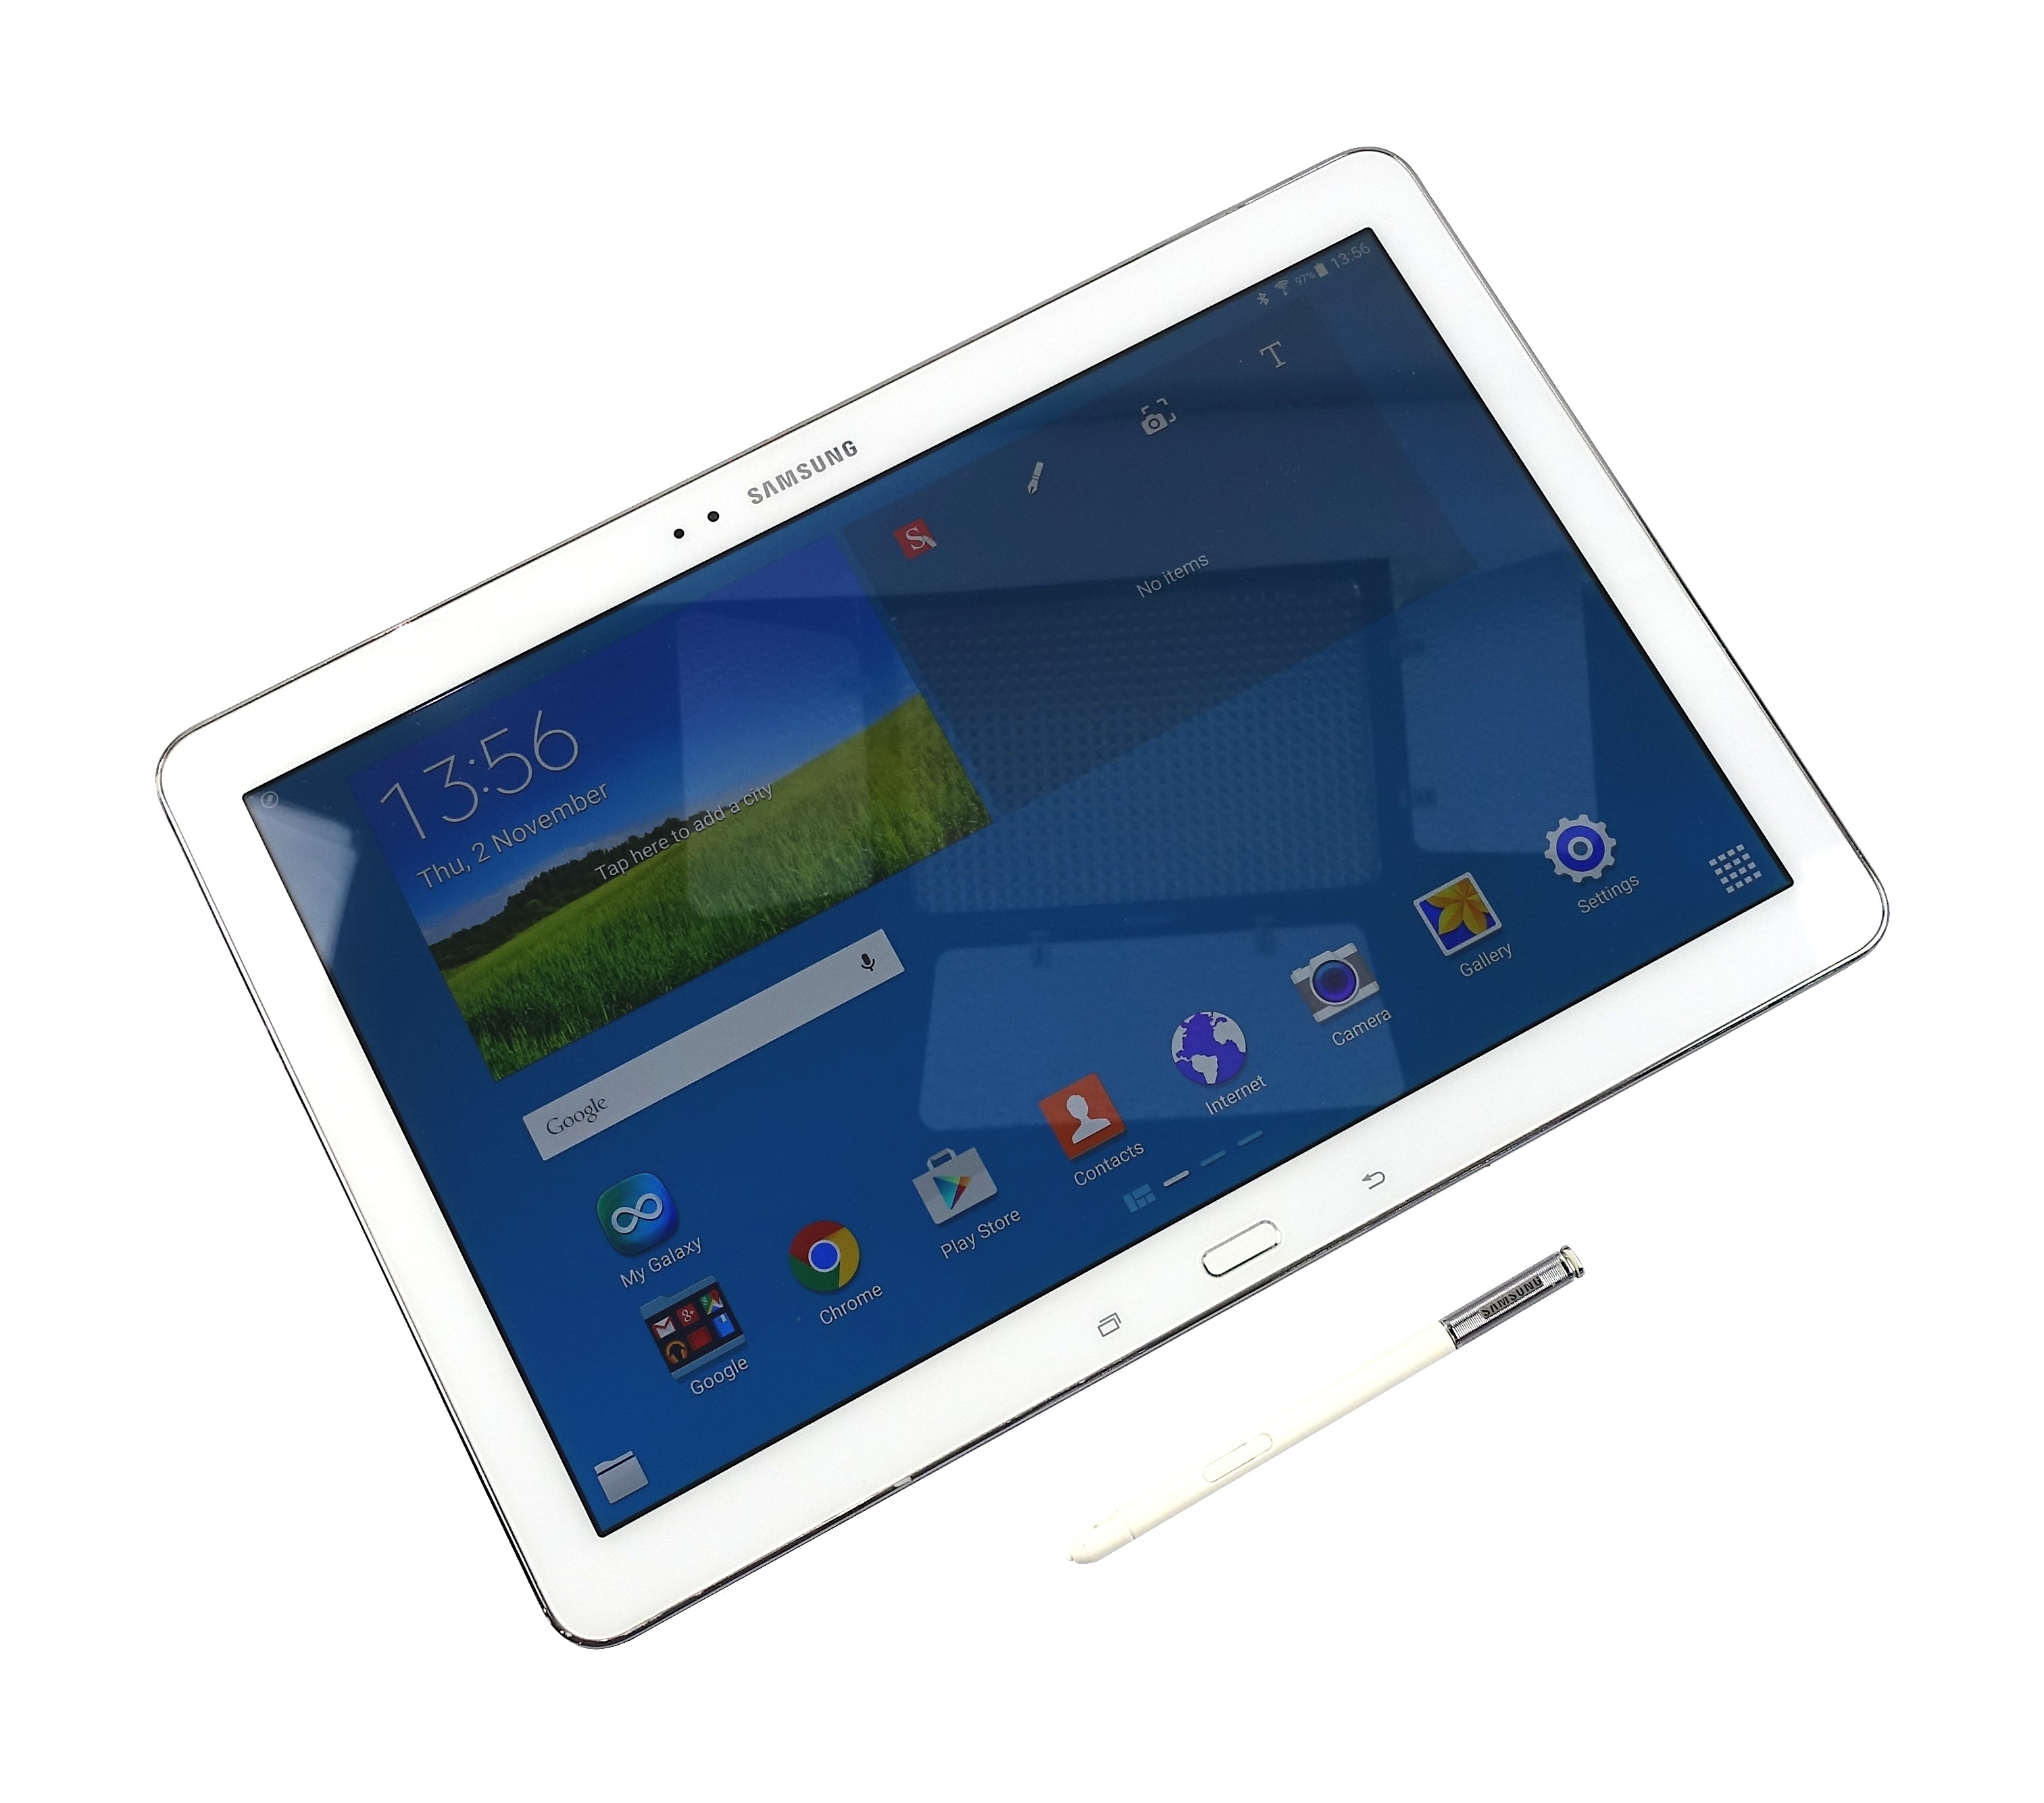 Samsung Galaxy Note Pro 12.2" Tablet, 32GB, WiFi, White, SM-P900